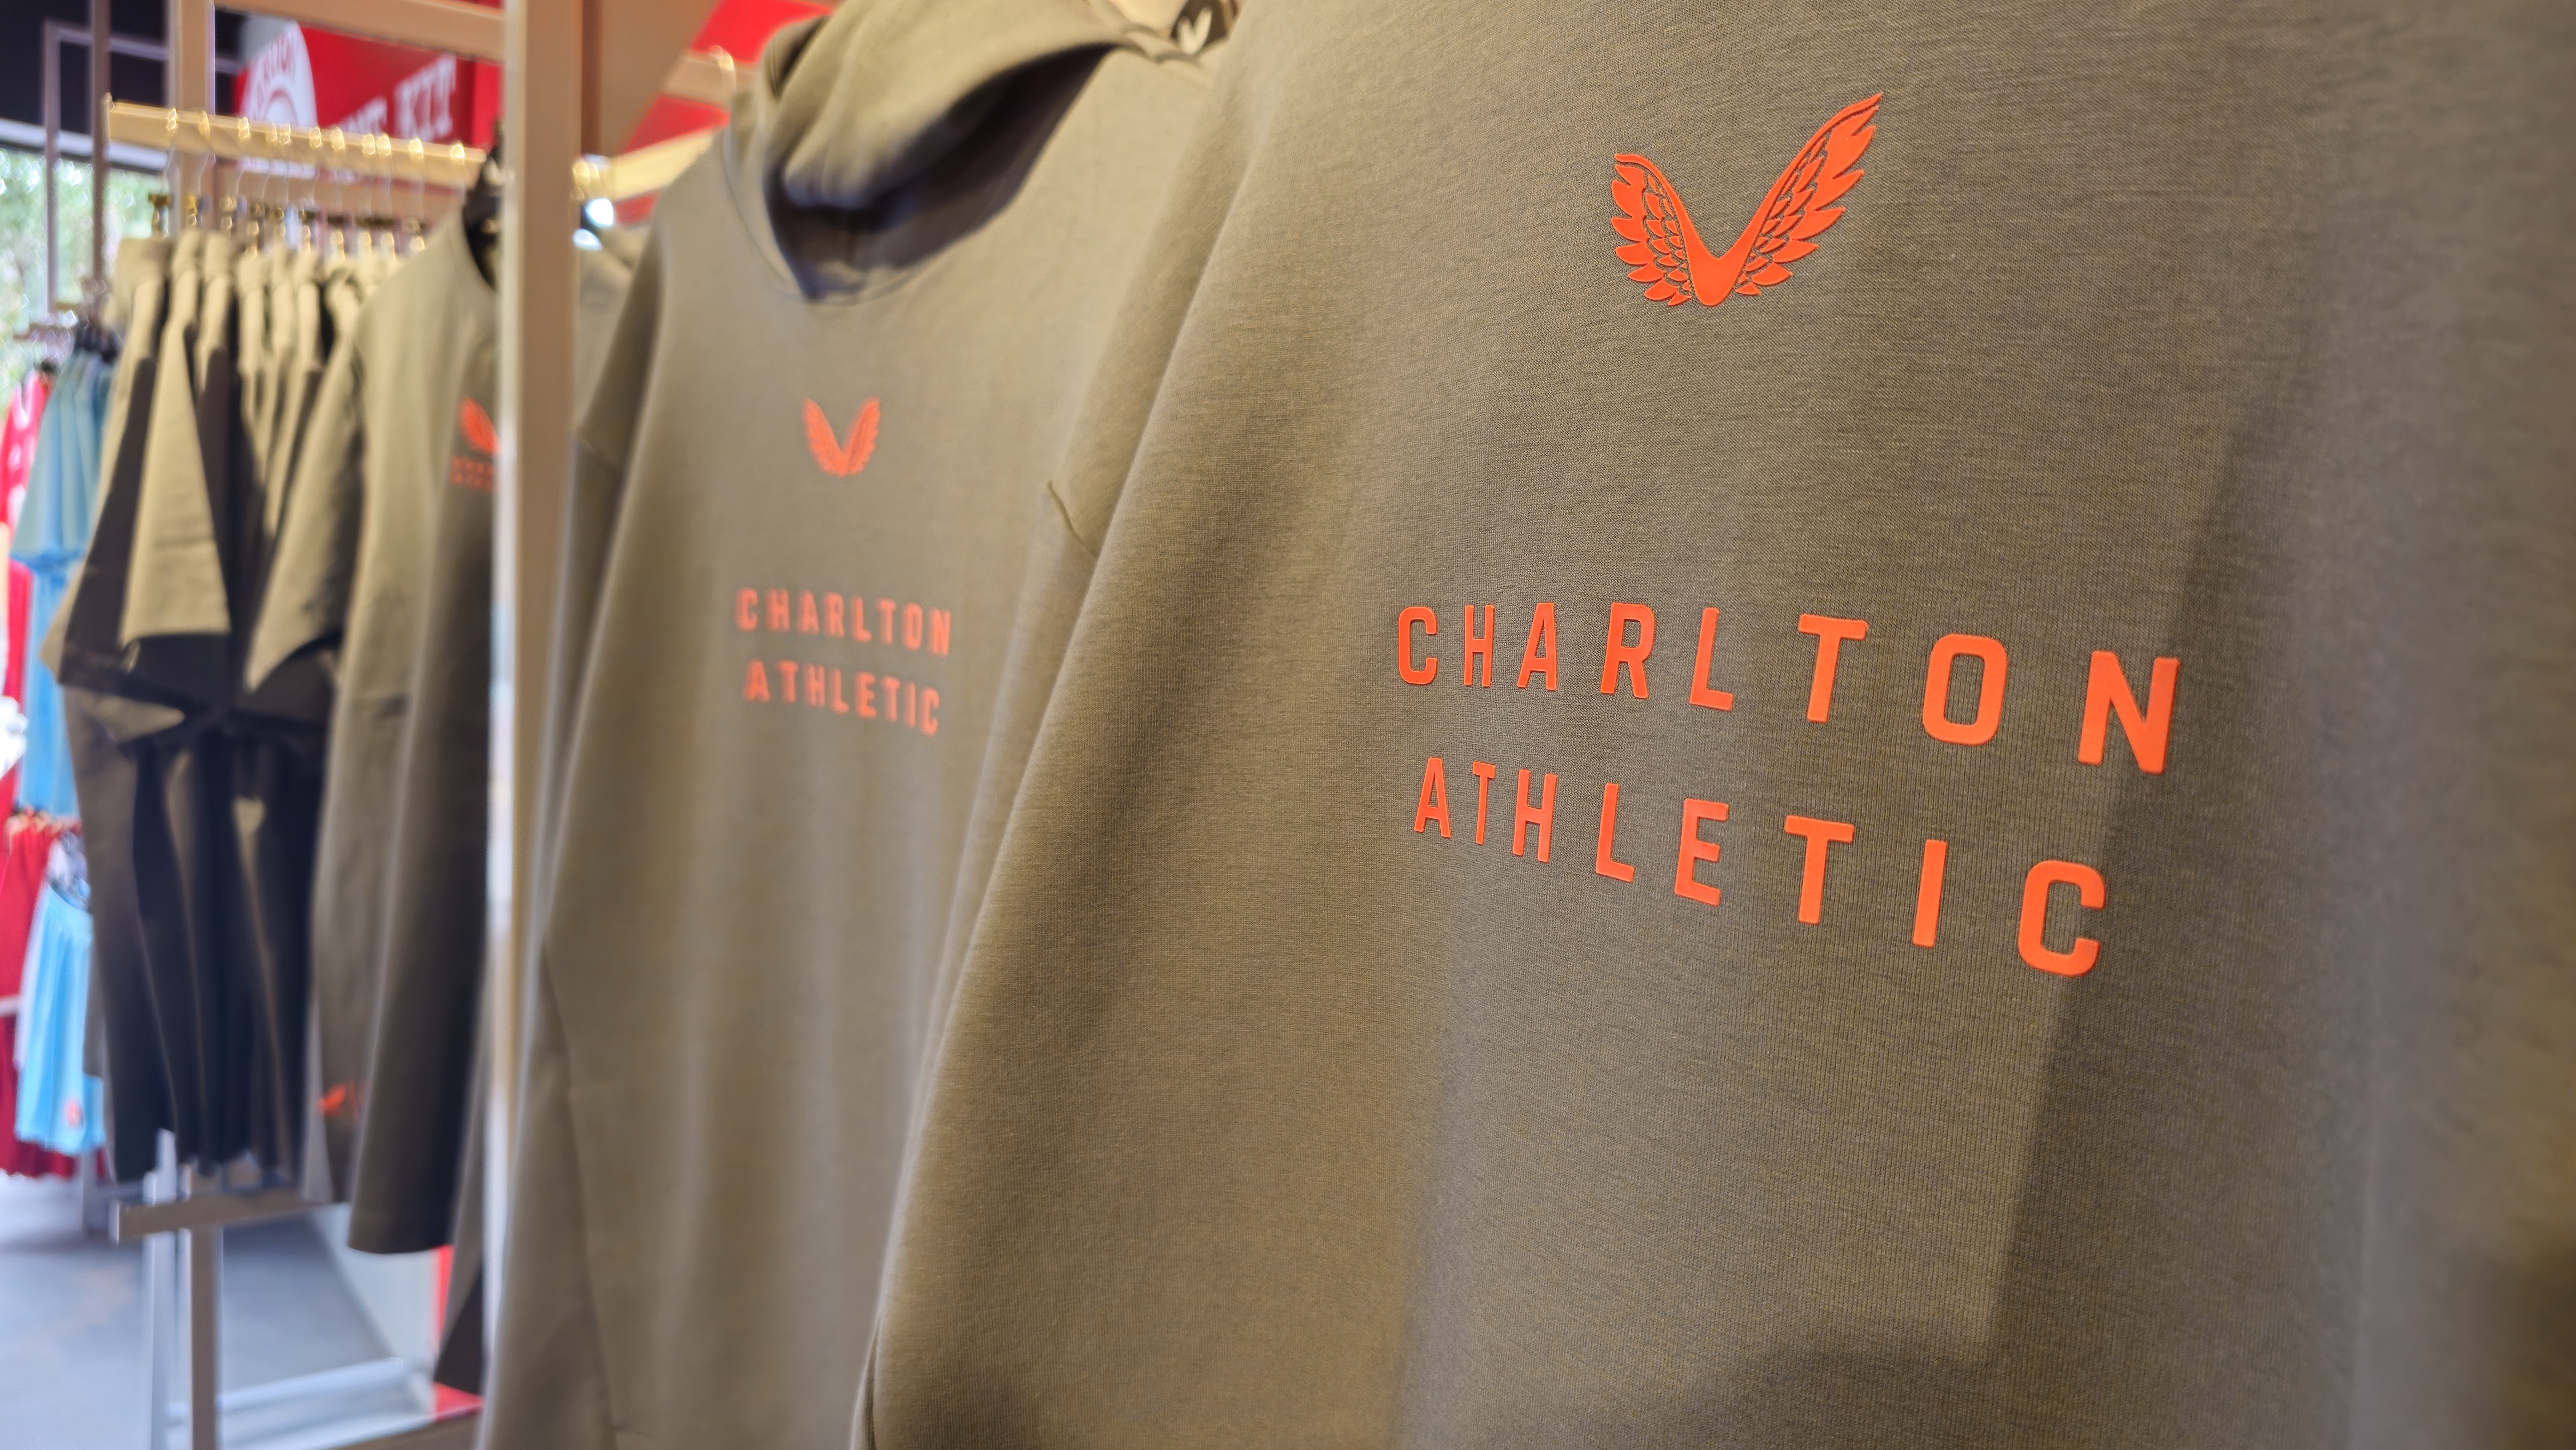 Charlton travel wear on sale in the club shop.